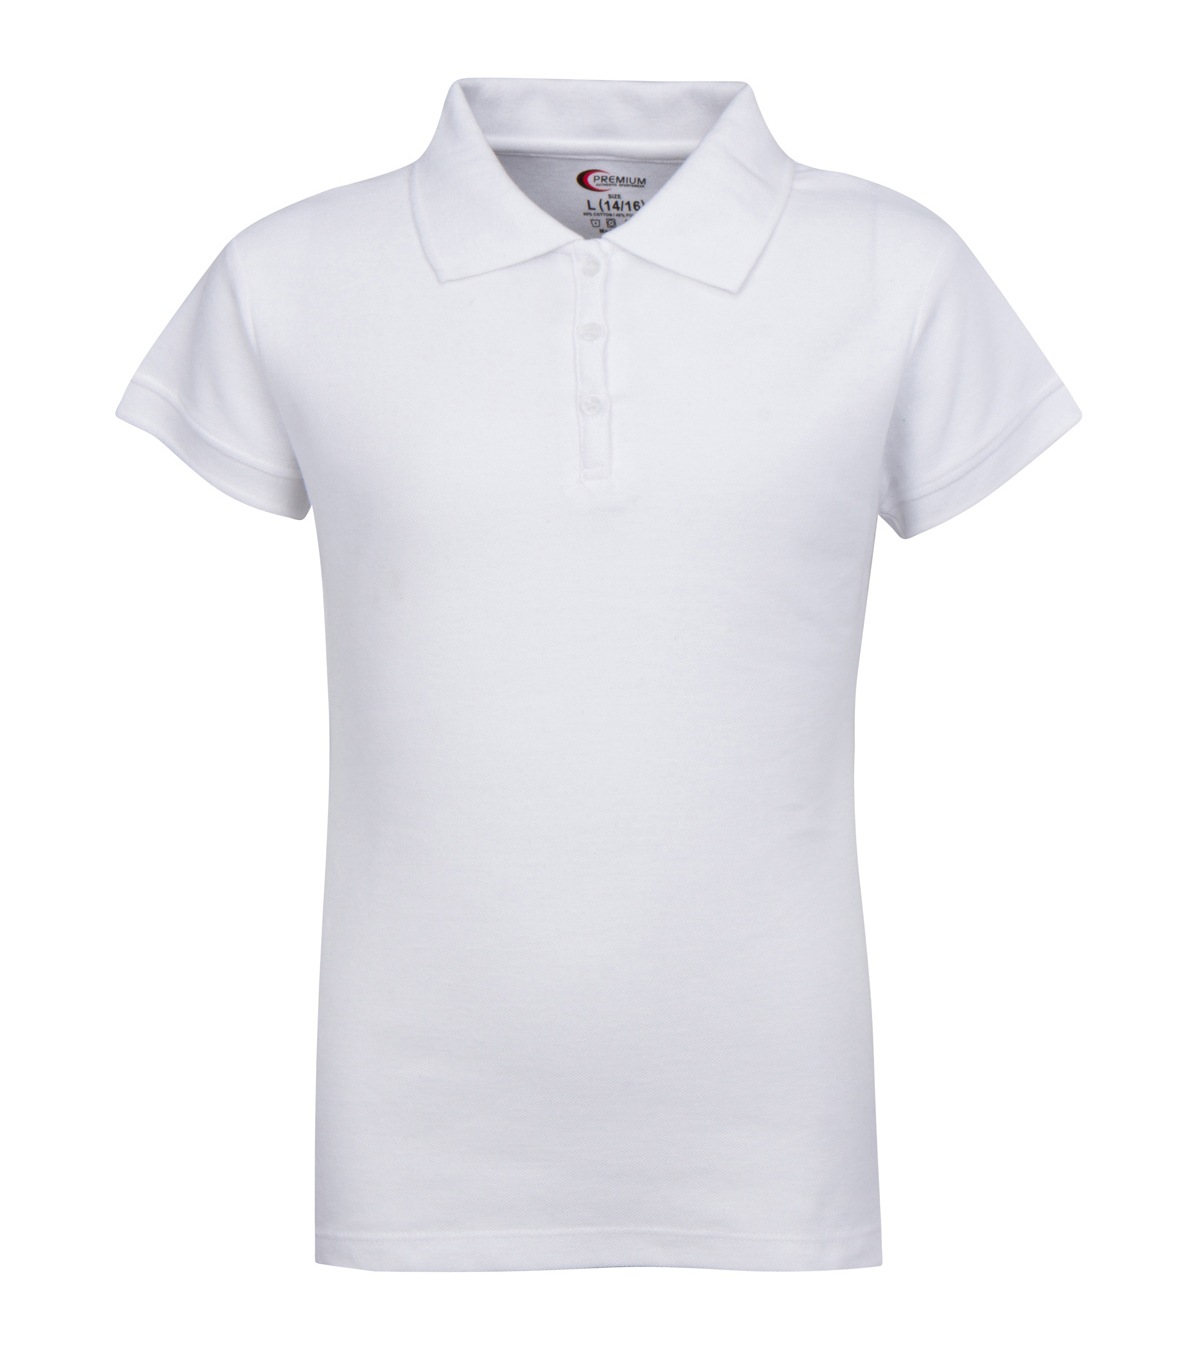 Girl's School UNIFORM Short Sleeve Polo Shirts - White - Small